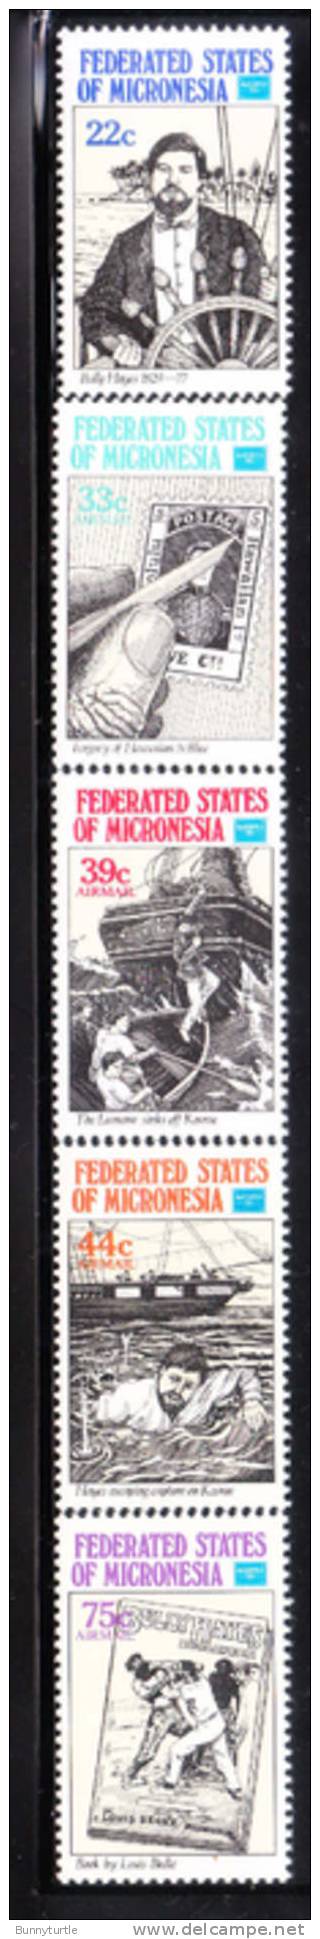 Micronesia 1986 Ameripex Ships Stamp Ship MNH - Mikronesien